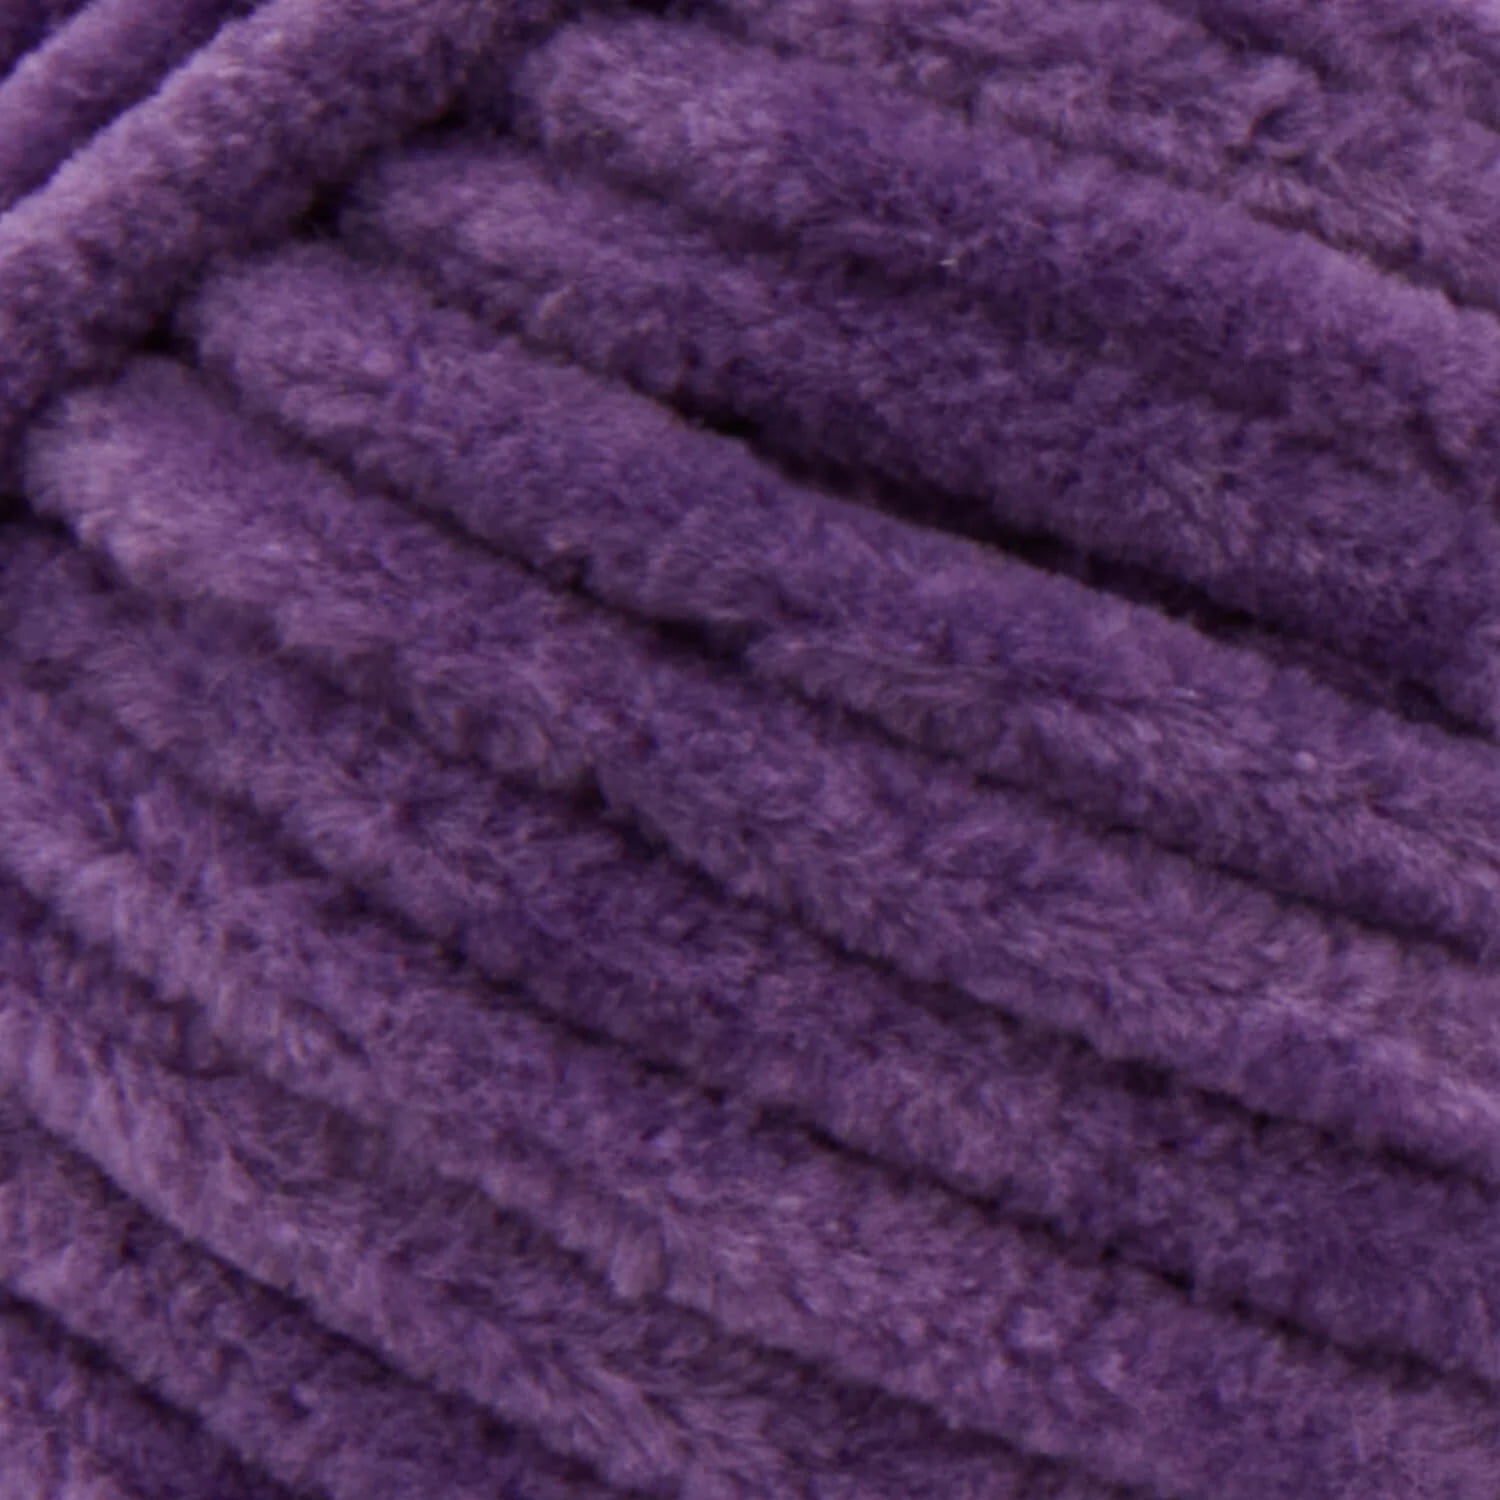 Premier Yarns Parfait Chunky Toffee 1150-16 (6-Skein) Same Dyelot Weight S Bulky #6 Soft Knitting Yarn 100% Polyester Bundle with 1 Artsiga Craft Bag